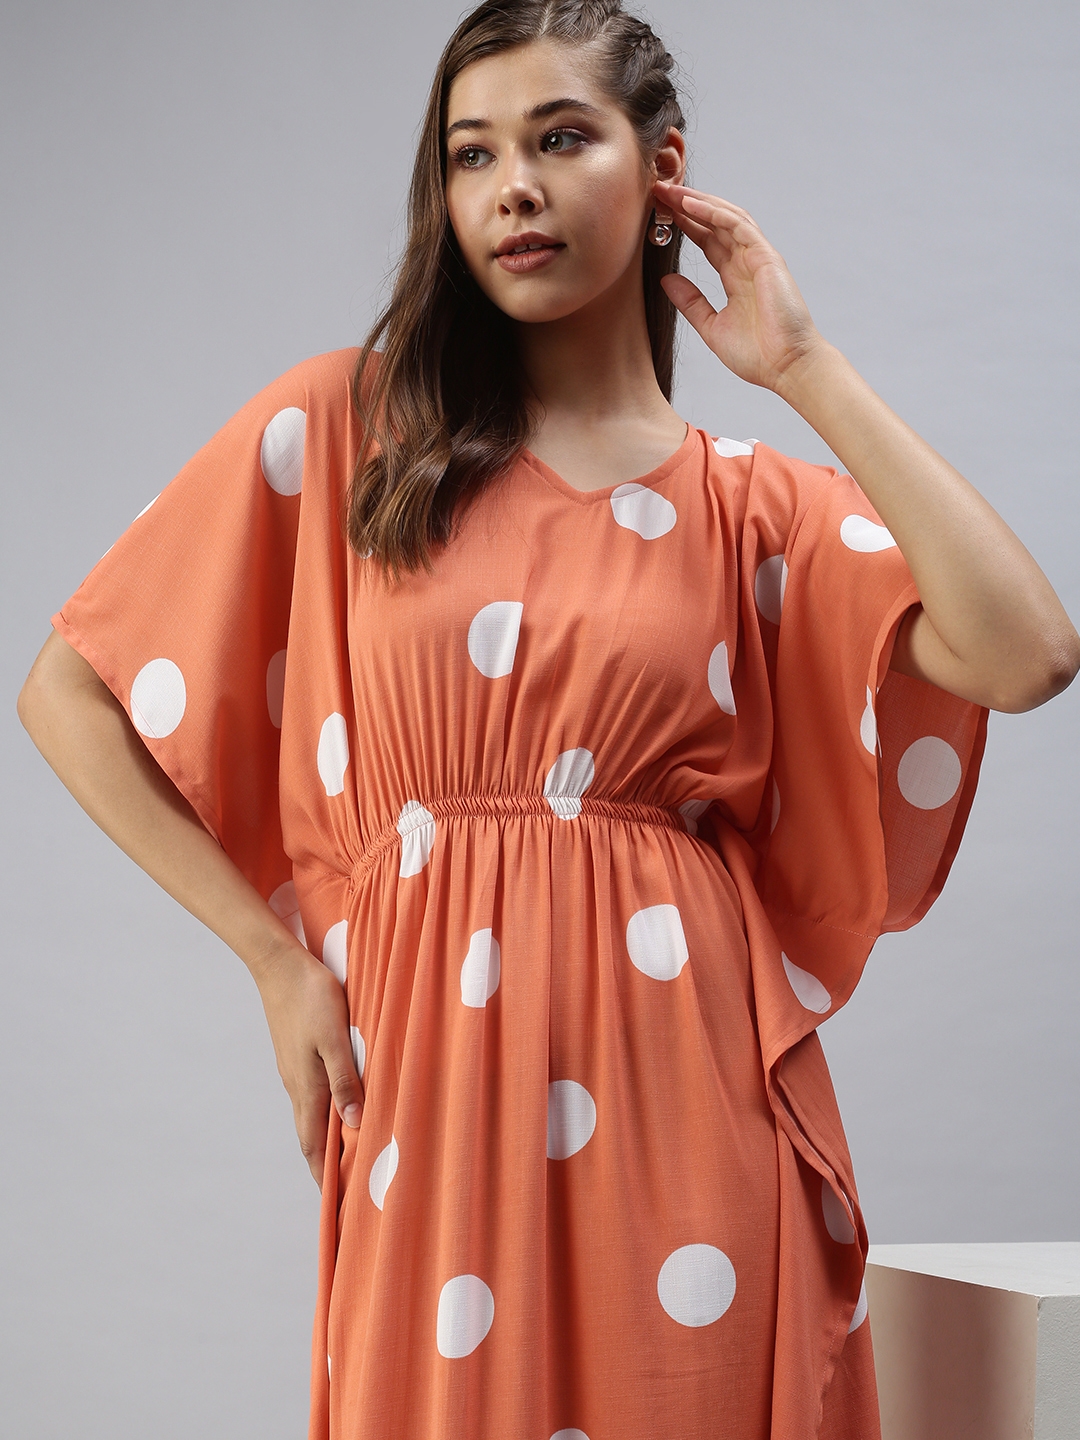 Showoff | SHOWOFF Women's Polka Dots Orange Empire Dress